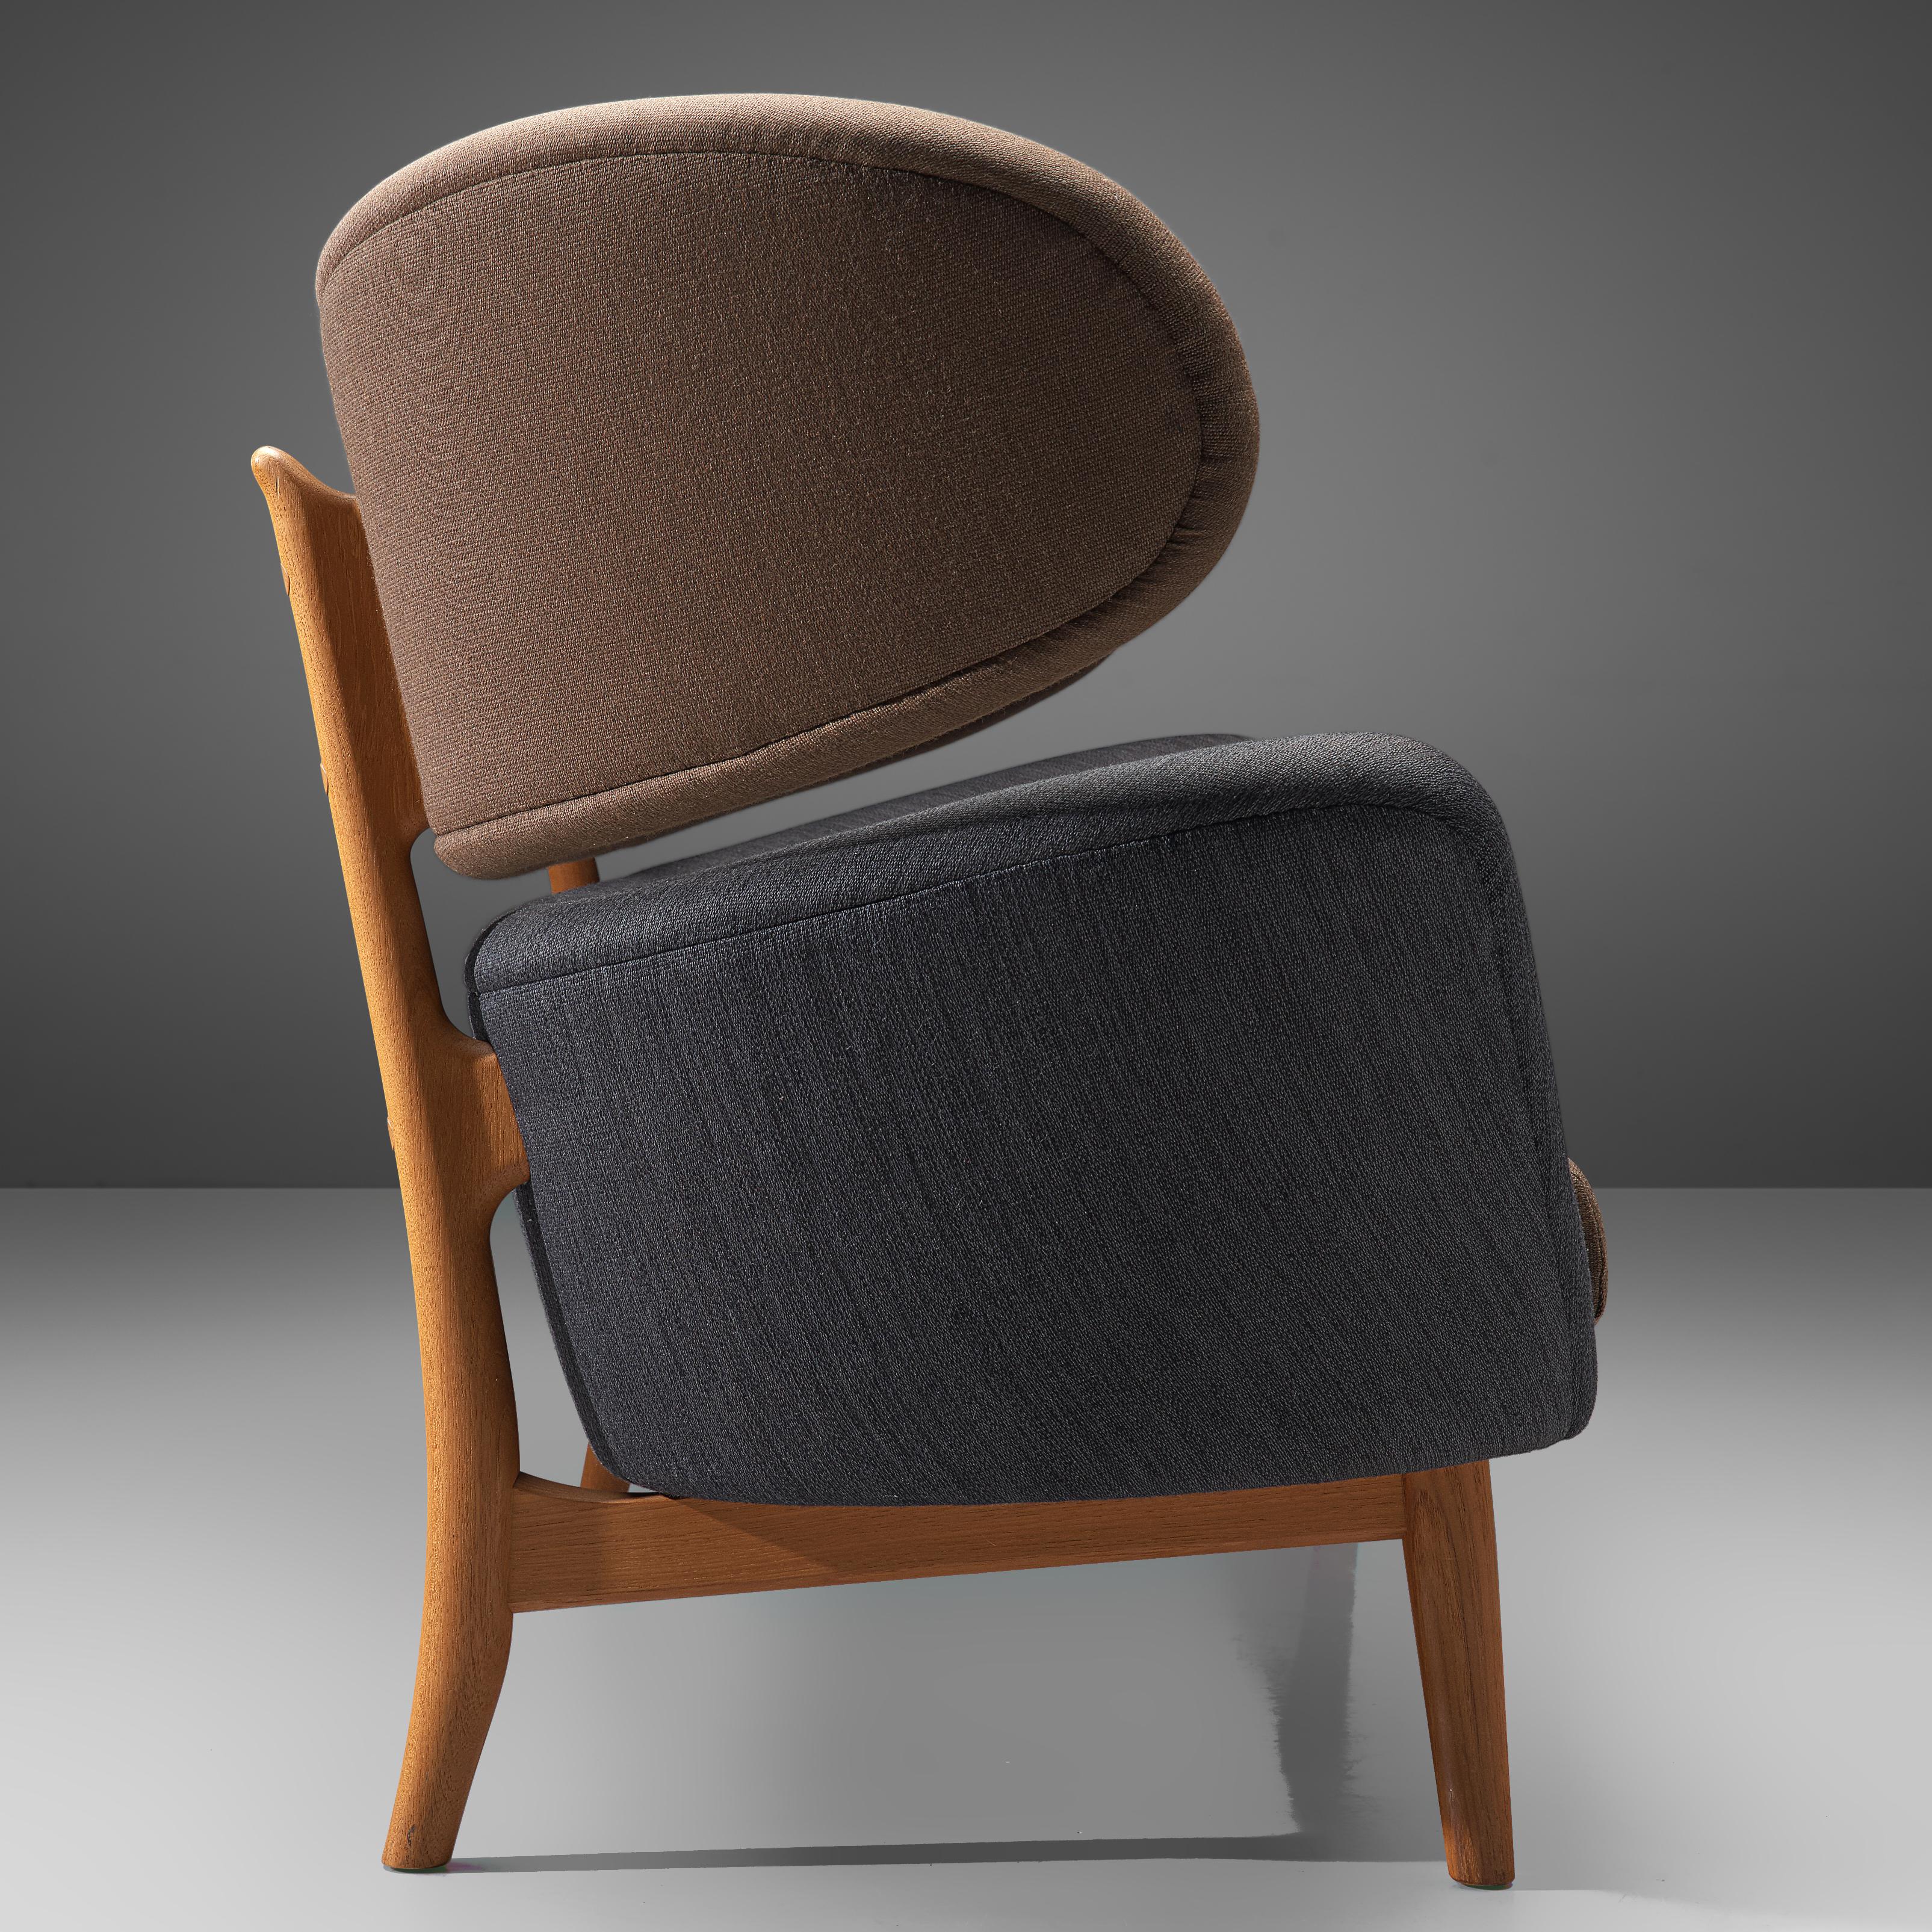 Finn Juhl 'Baker' Sofa in Oak and Black/Brown Fabric 1